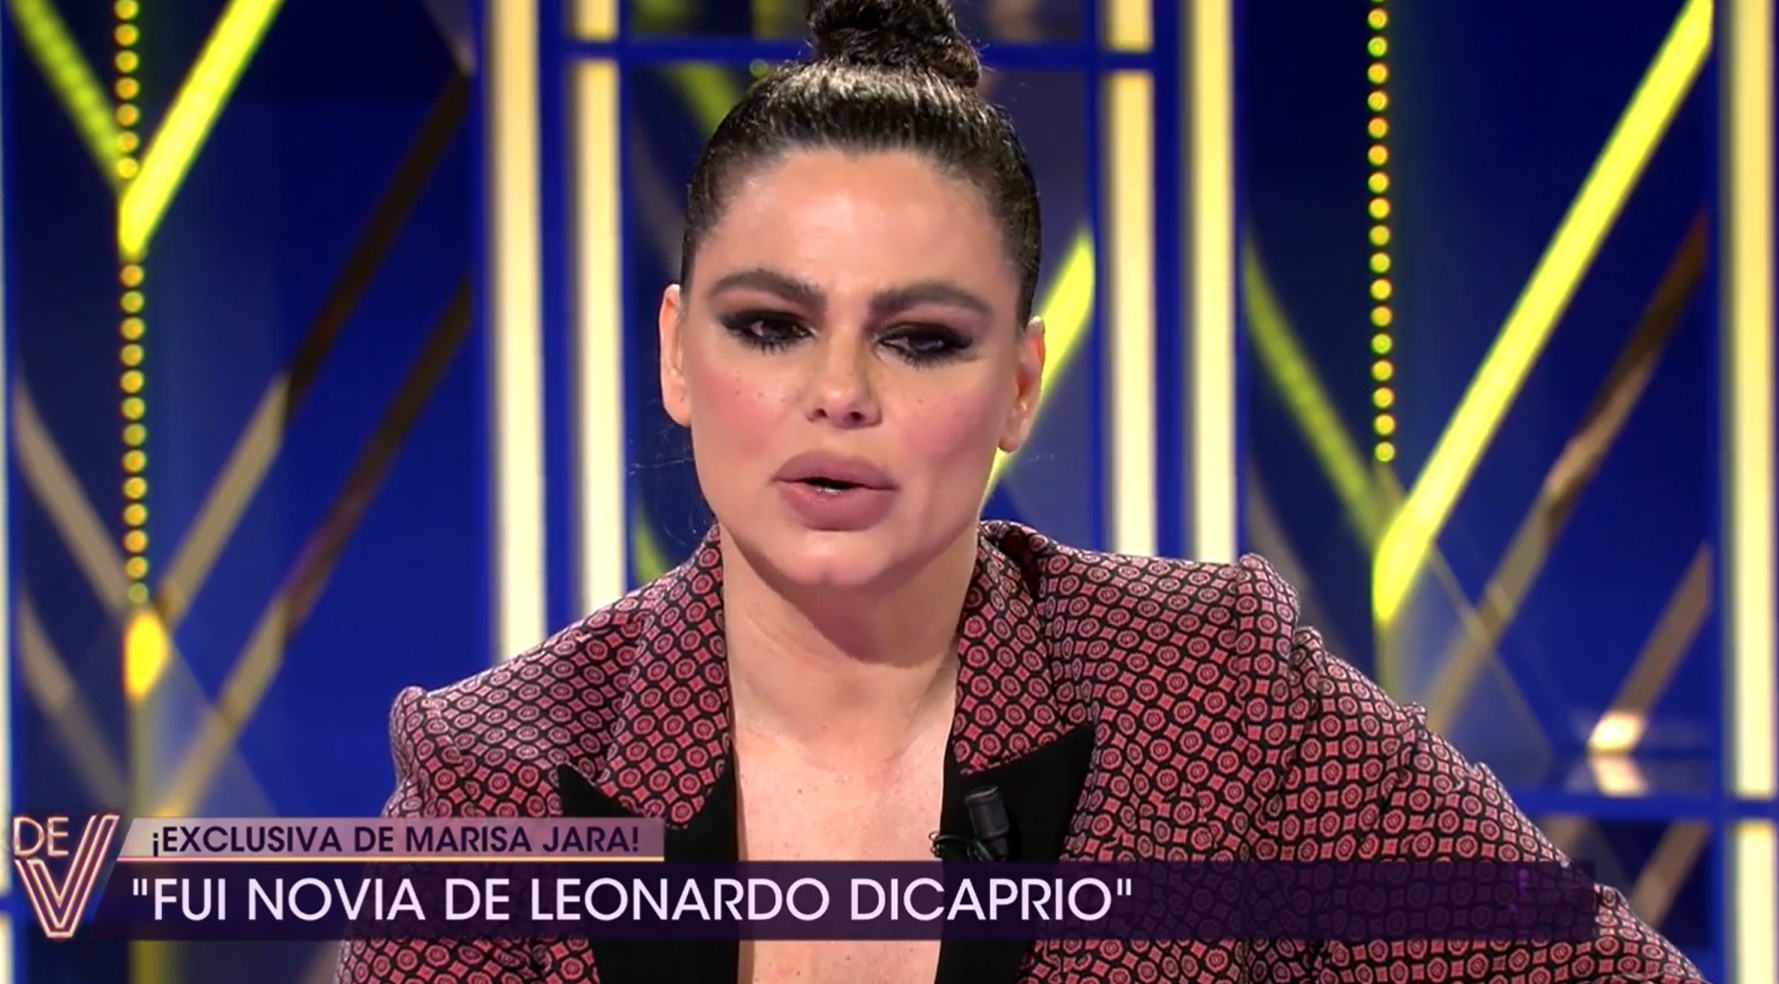 Marisa Jara desvela su relación 'secreta': "Fui novia de Leonardo DiCaprio"